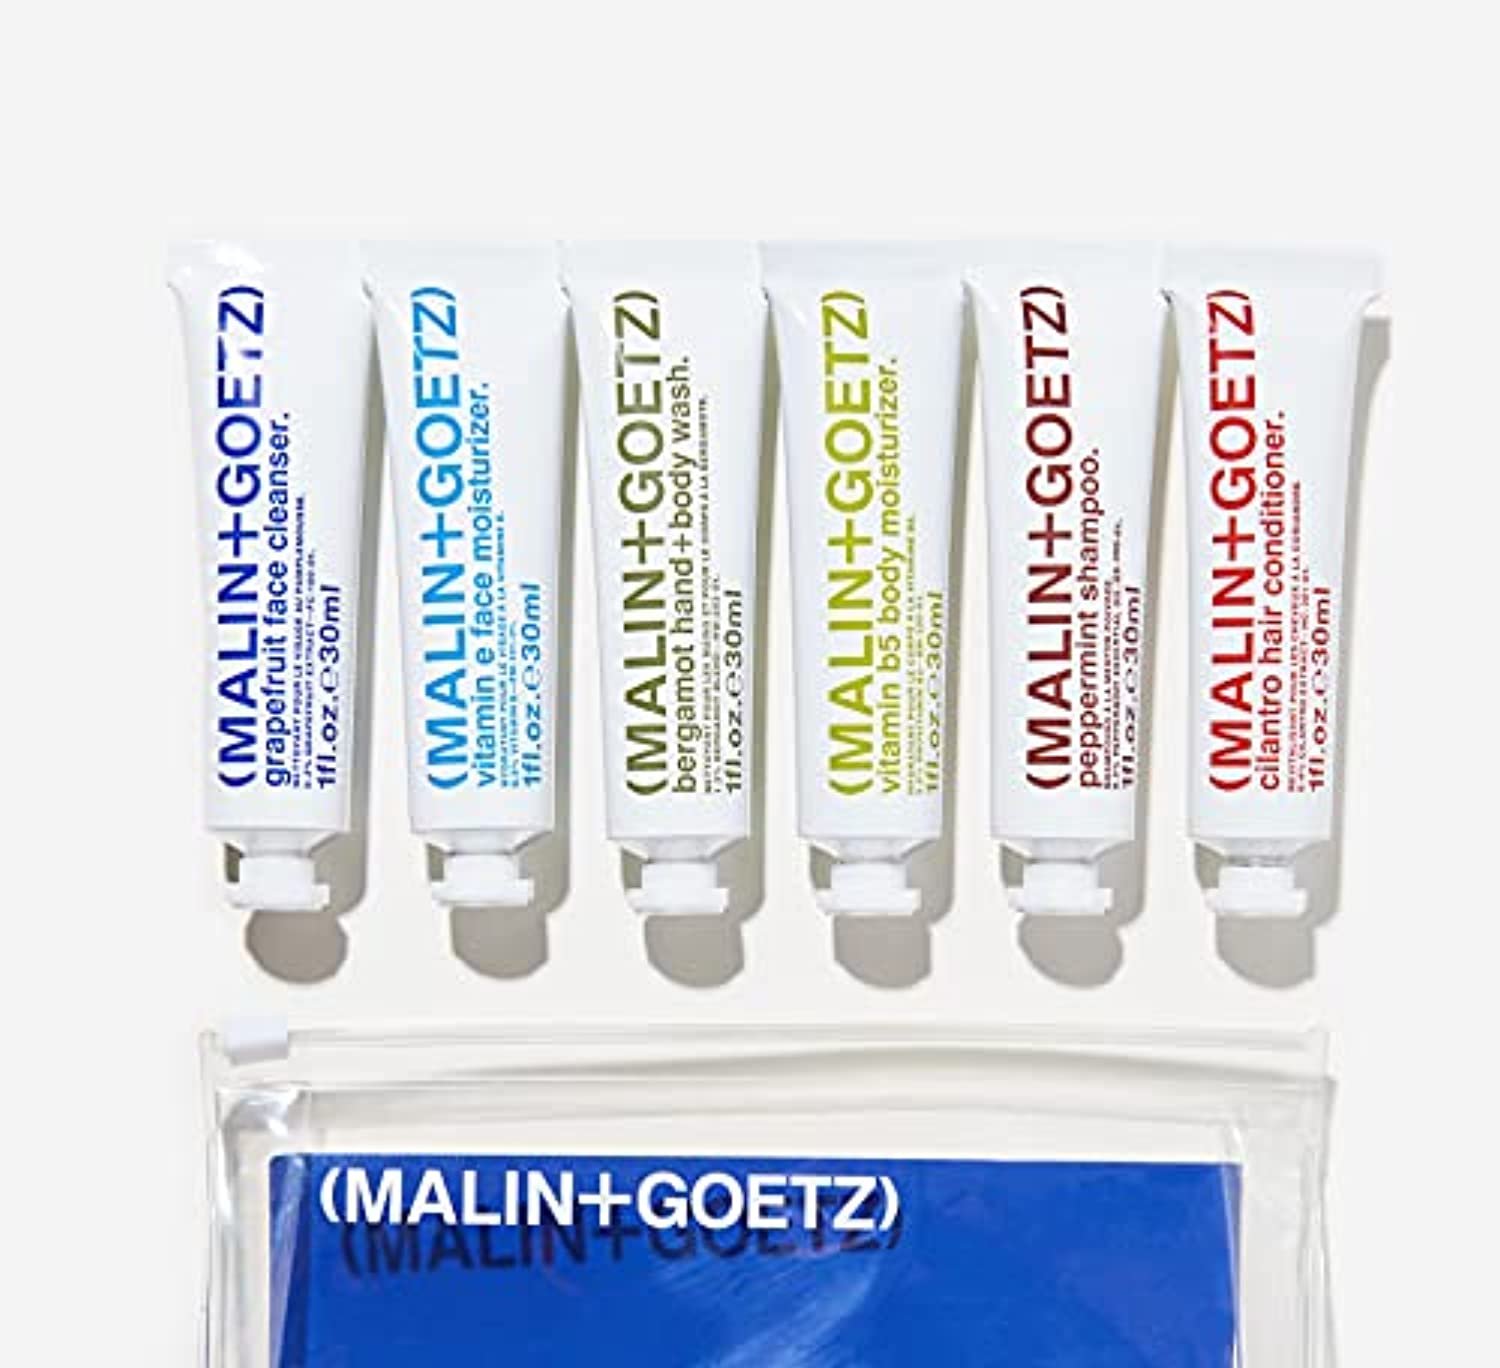 Malin + Goetz Essential Starter Kit- including hair shampoo & conditioner, facial cleanser & moisturizer, body wash & moisturizer, all natural ingredients, all skin types, cruelty-free, vegan